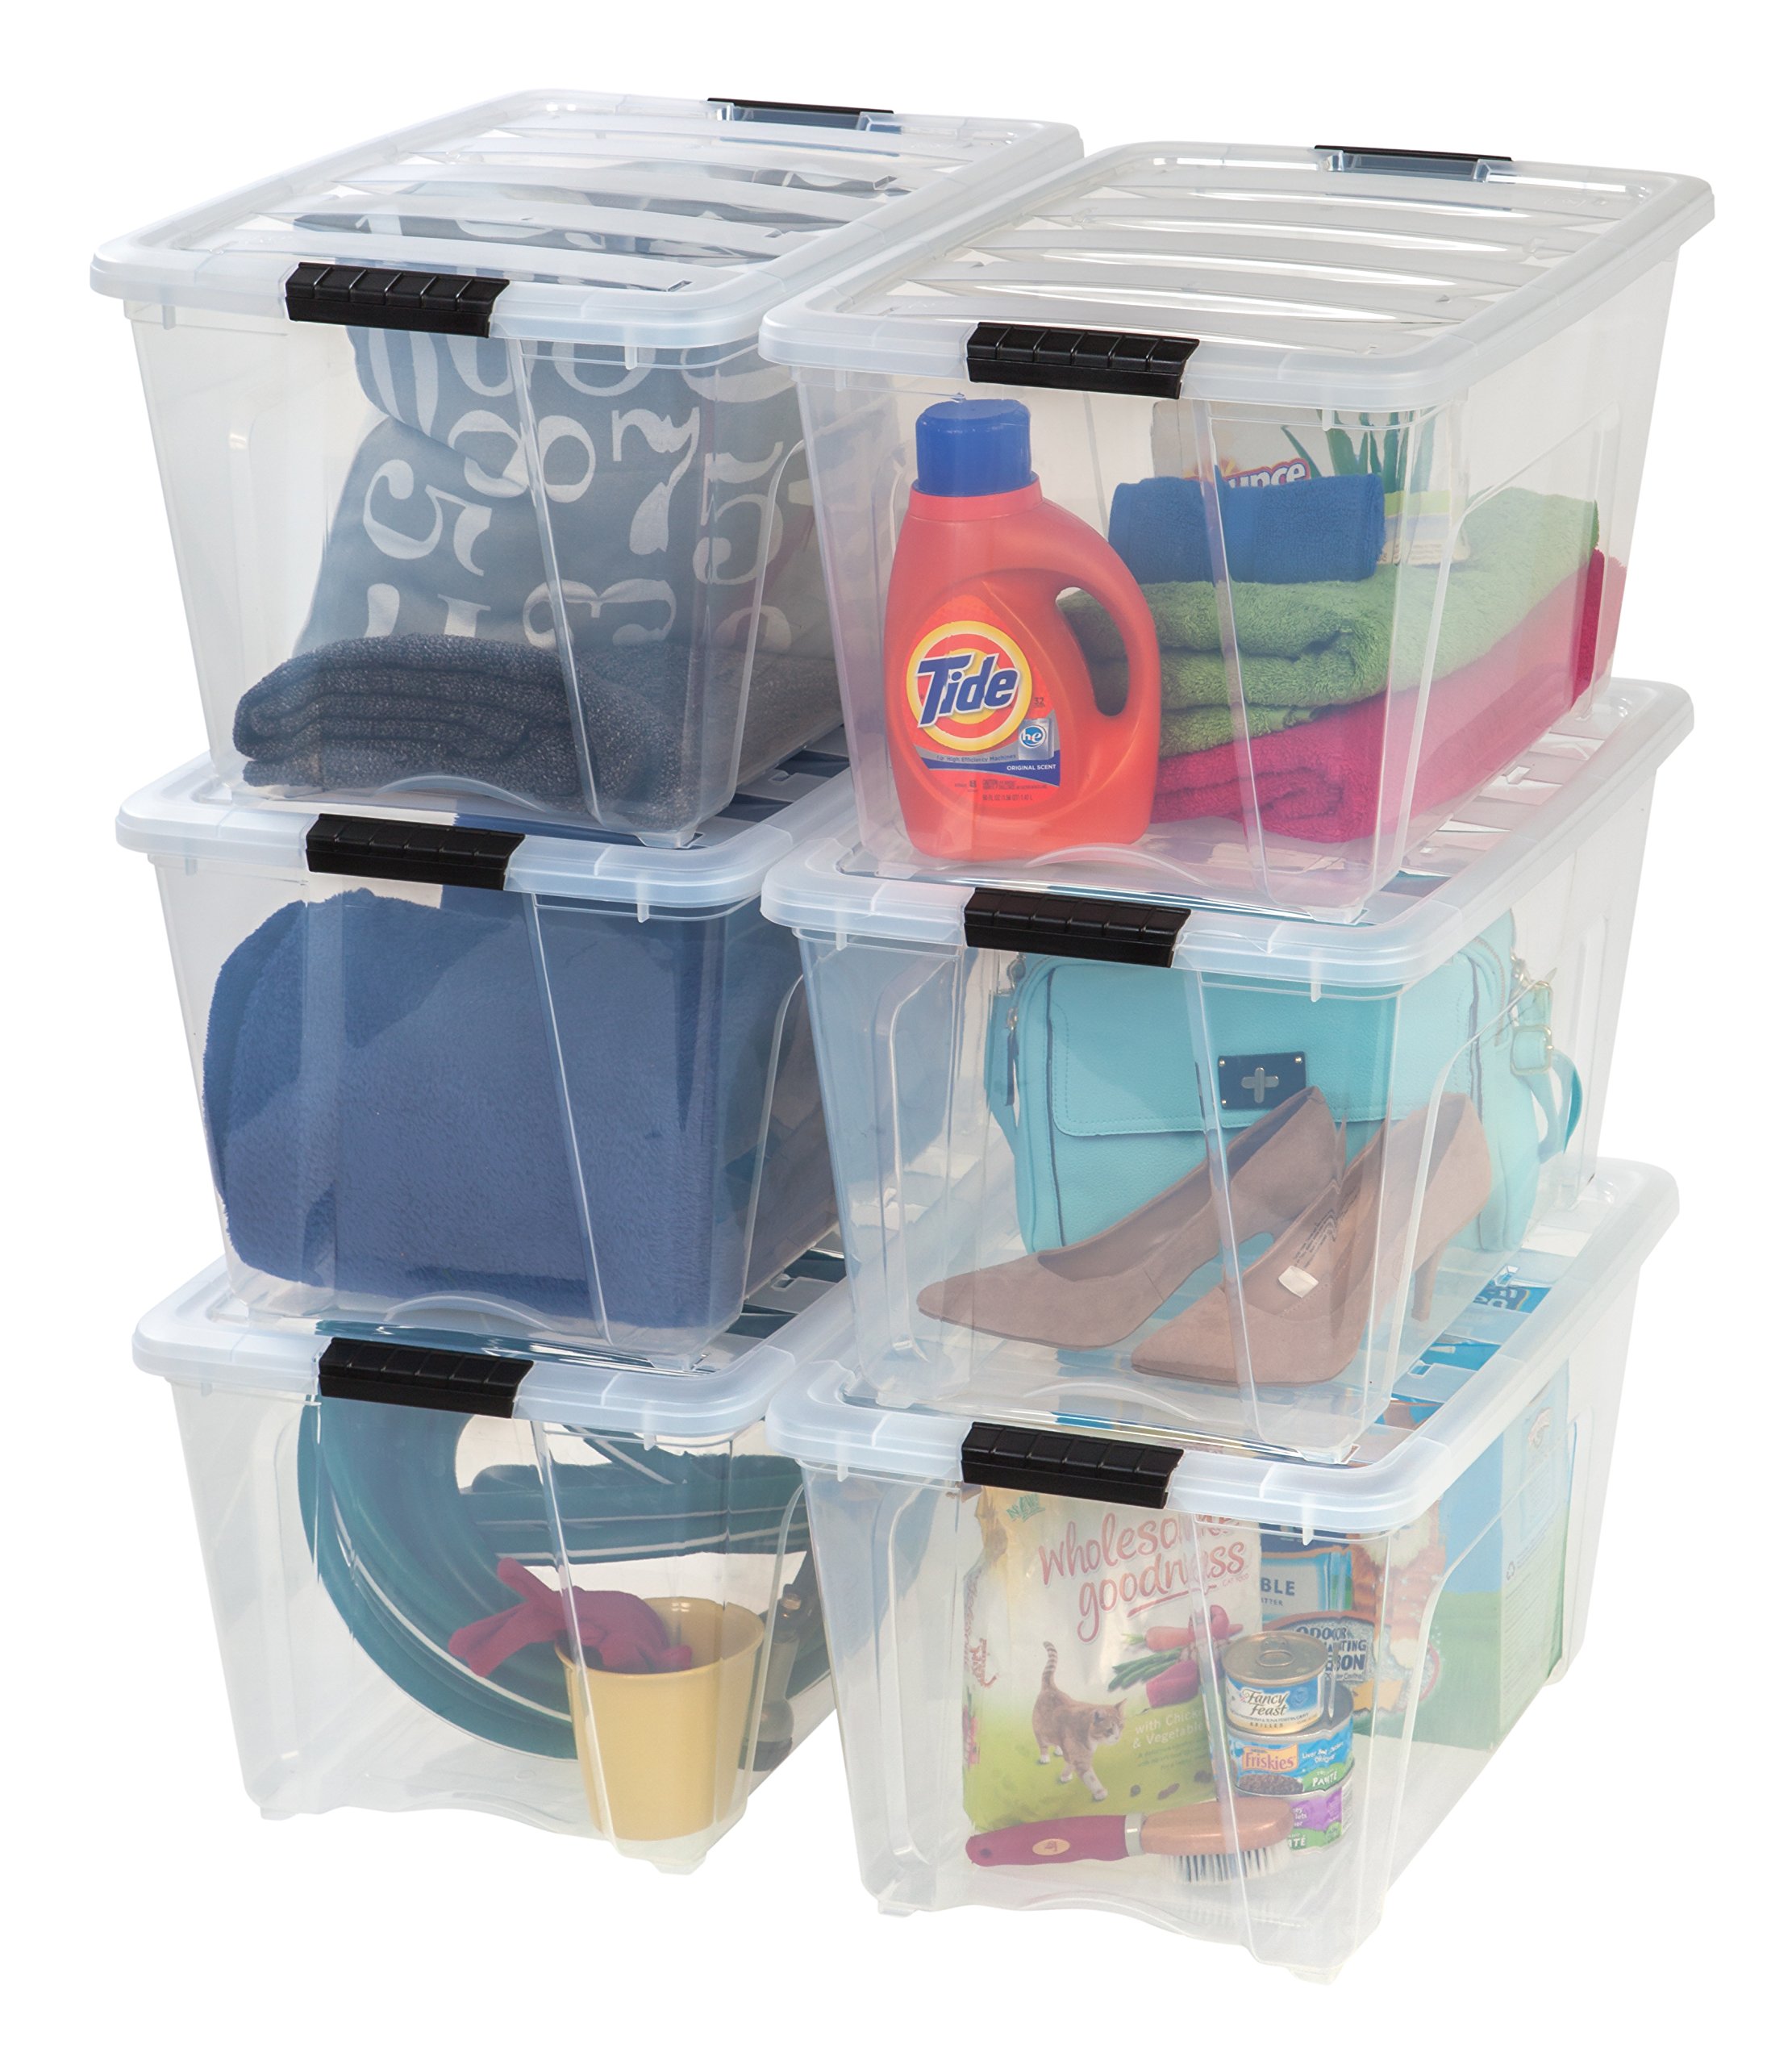 IRIS USA, Inc. IRIS USA 53 夸脱可堆叠塑料储物箱，带盖子和闩锁，6 件装 - 透明，带盖子和闩锁的容器，耐用可嵌套壁橱、车库、手提袋、浴缸盒整理